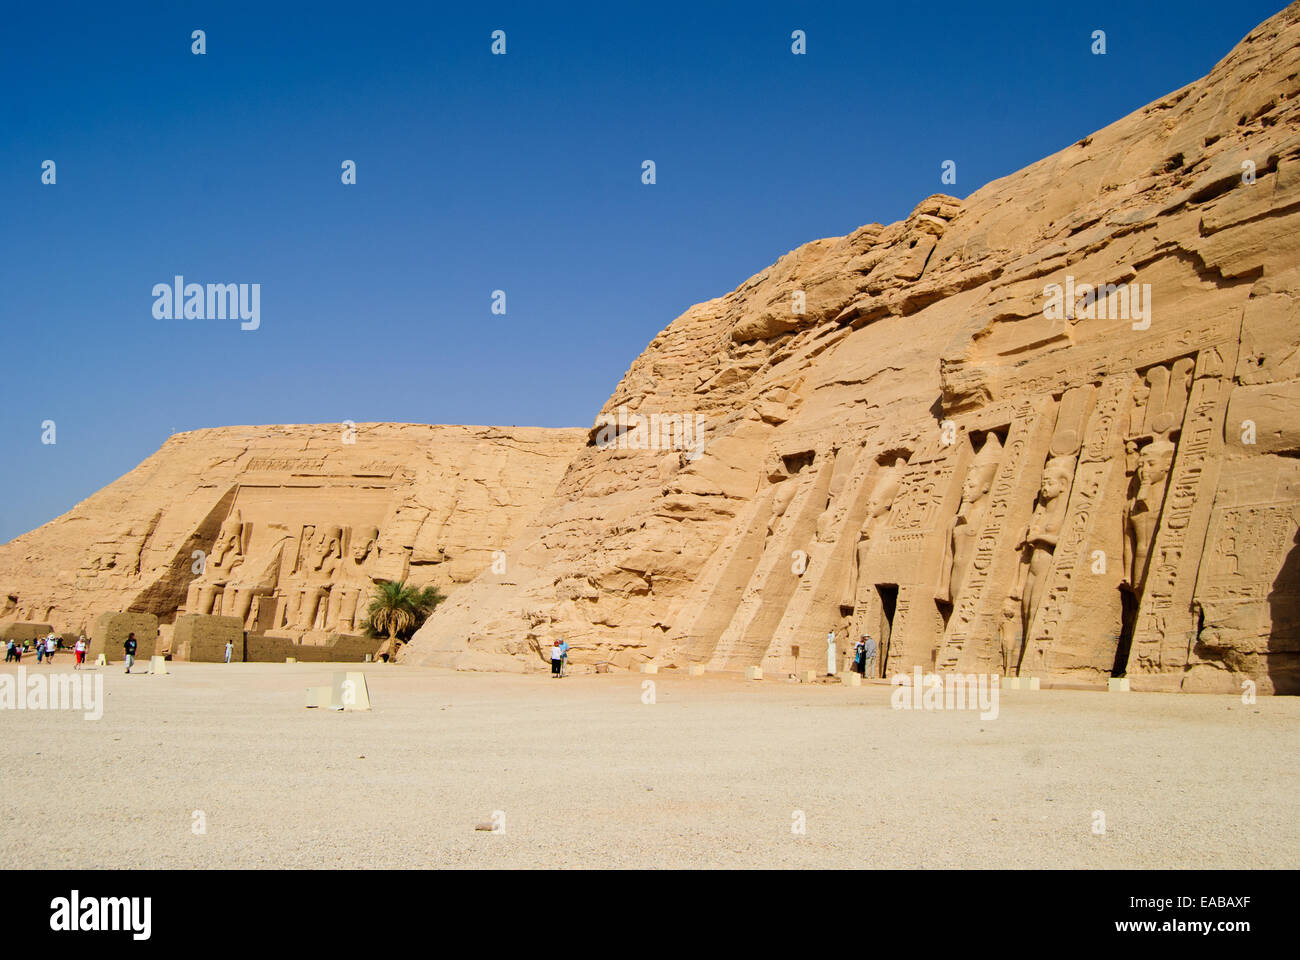 Abu Simbel ancient Egytian temples Stock Photo